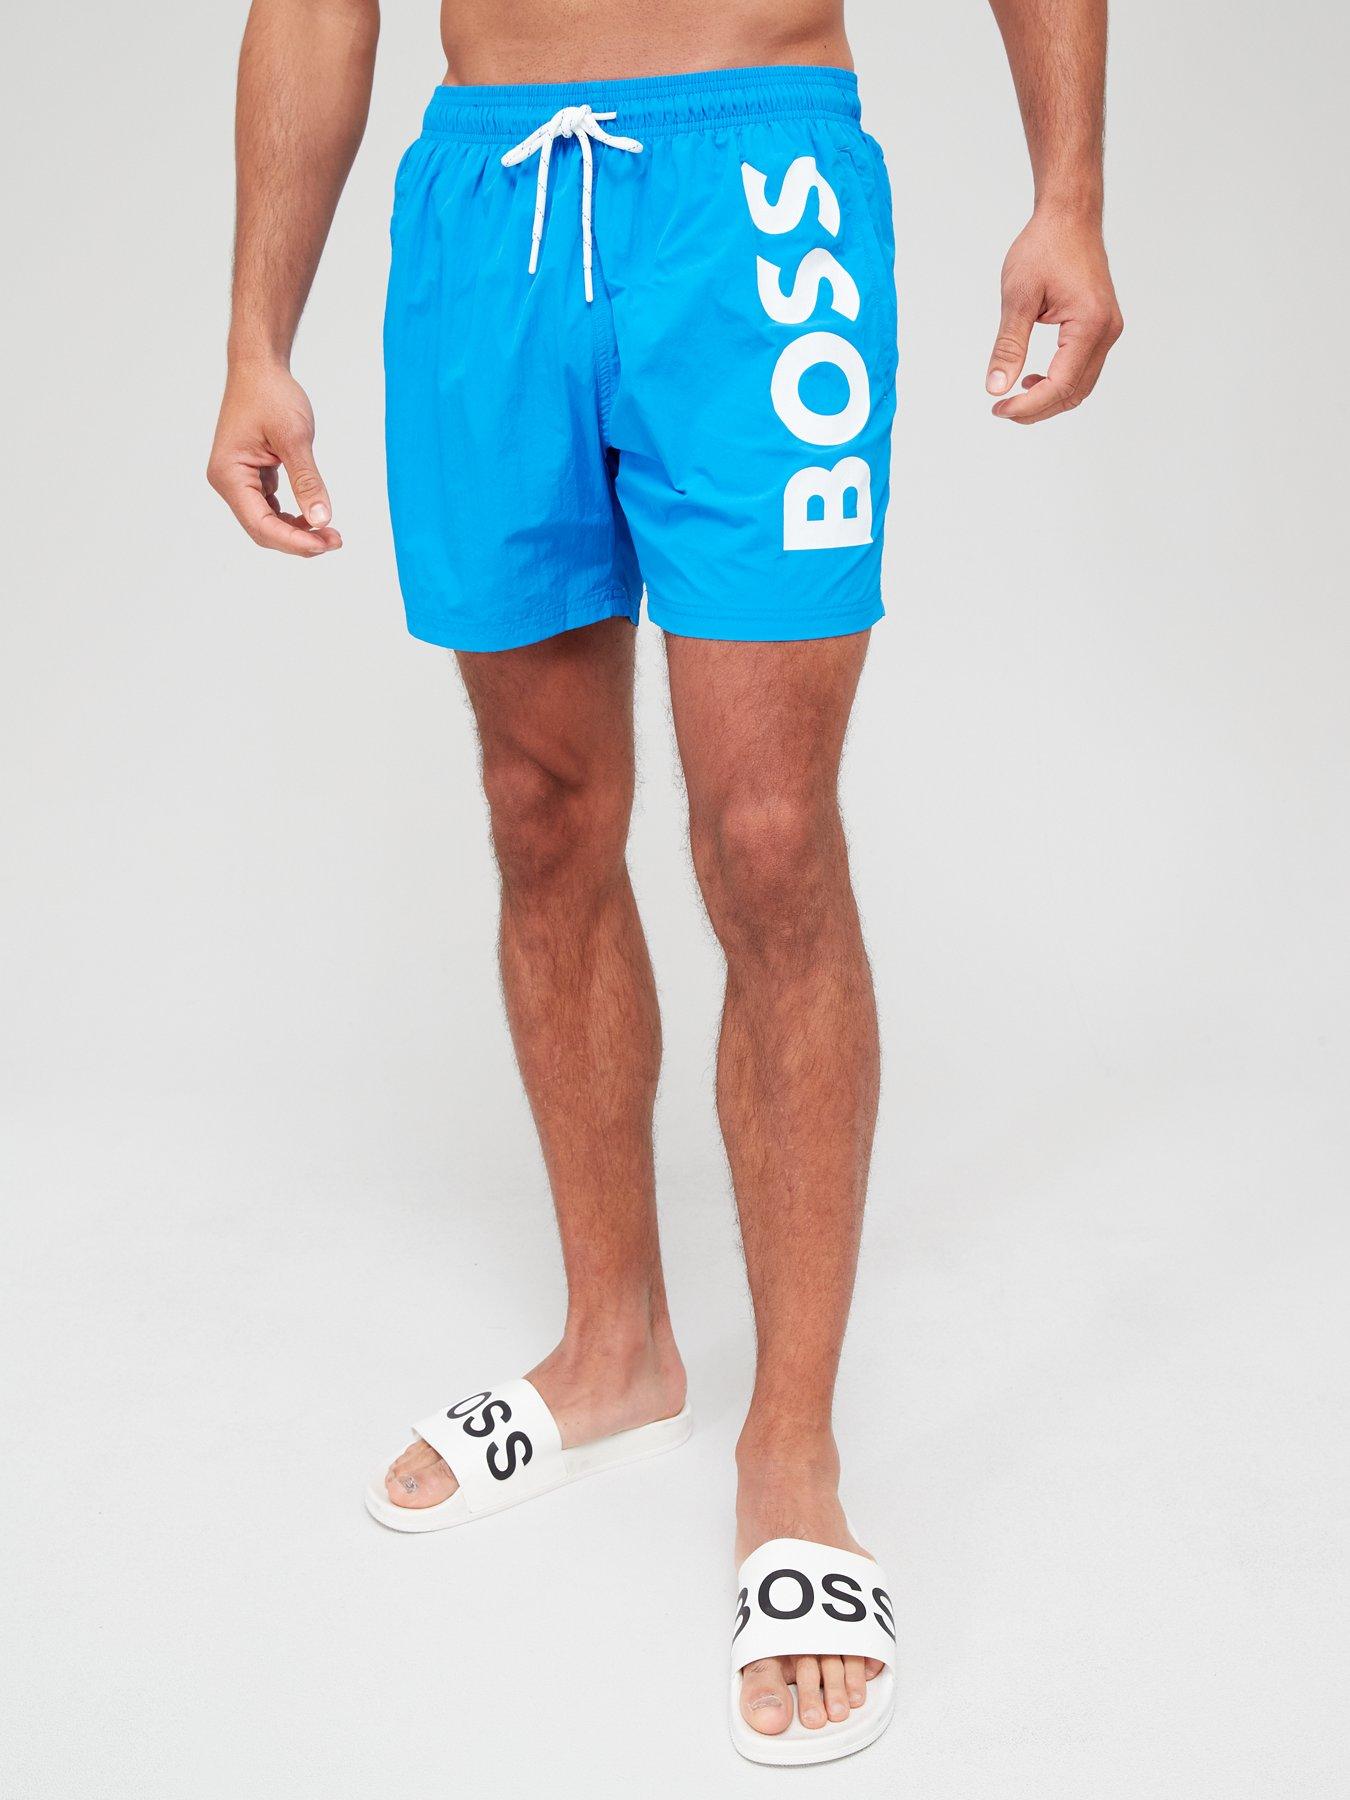 Boss Men's monogram-print Swim Shorts in Quick-drying Fabric - Black - Size Small